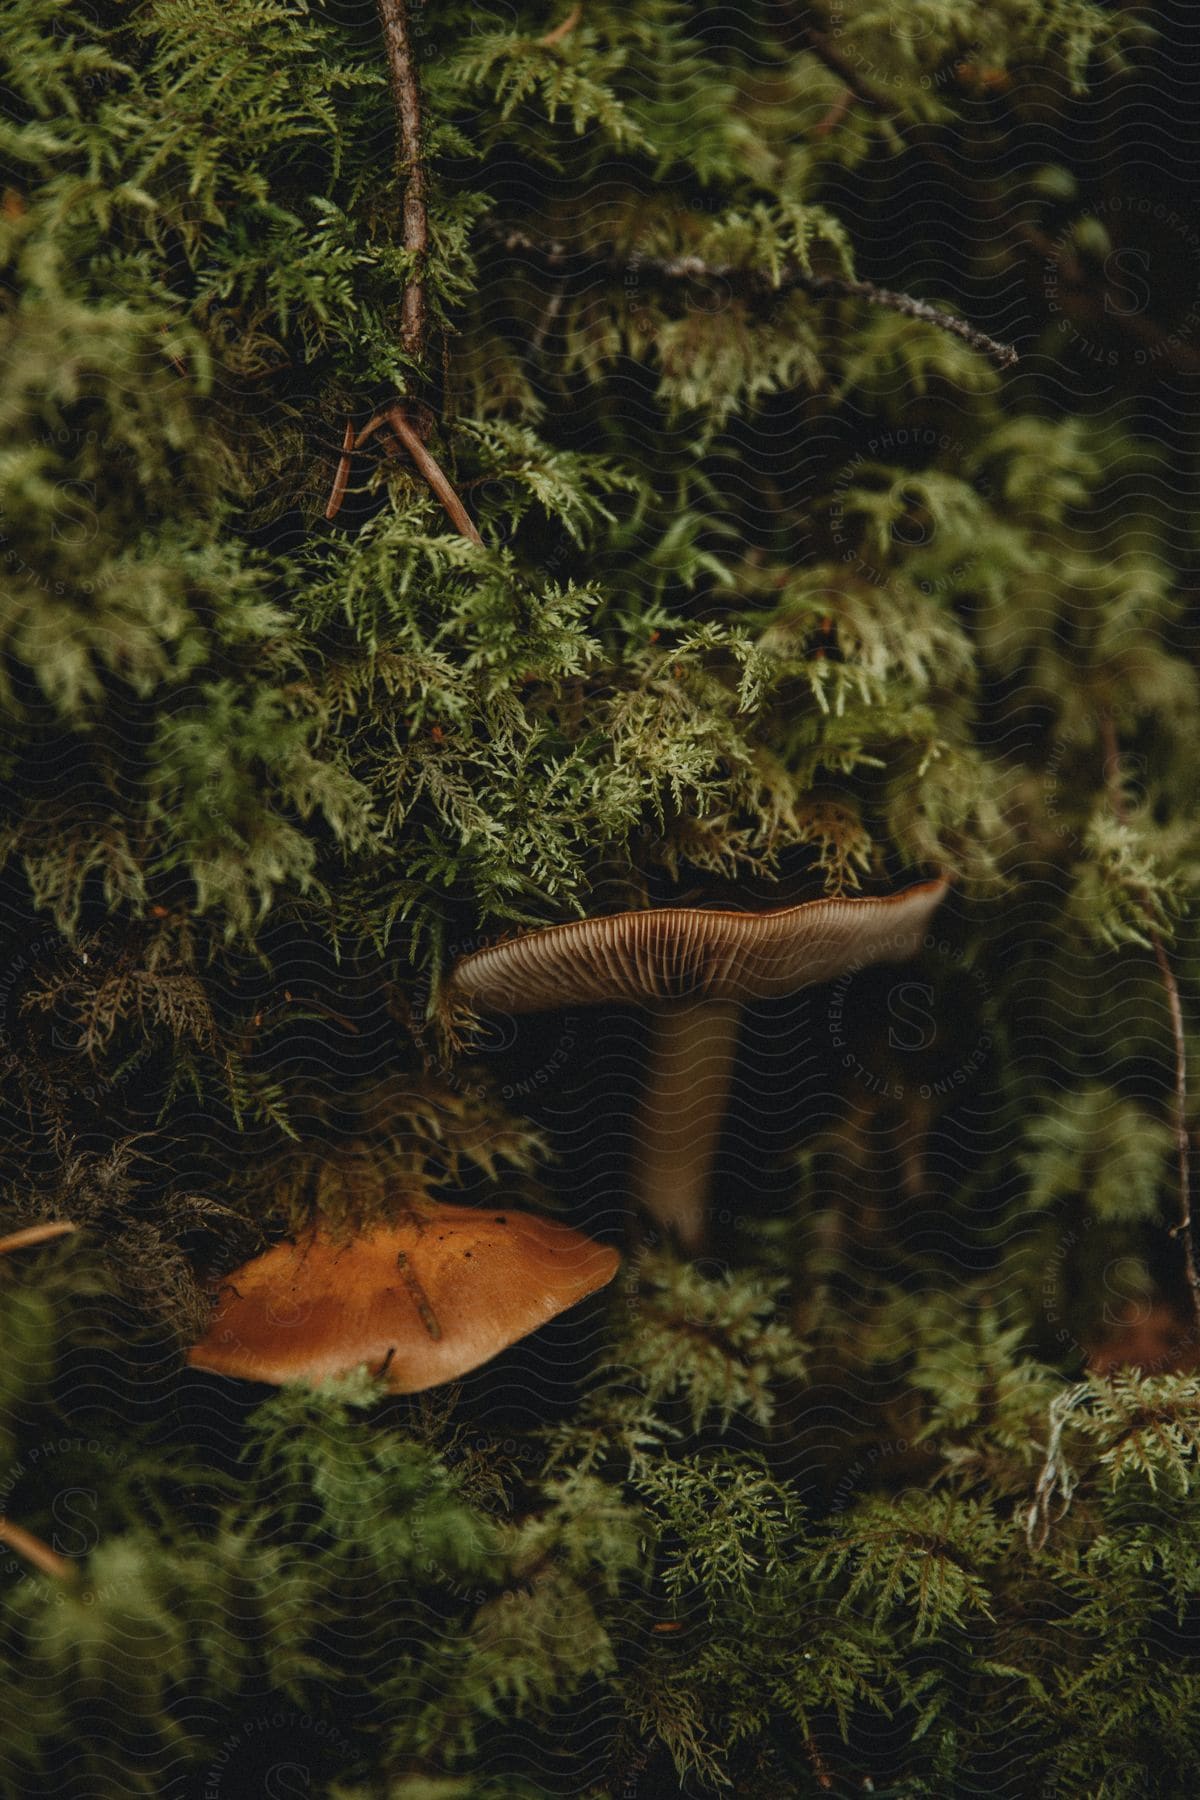 Mushrooms among mosses